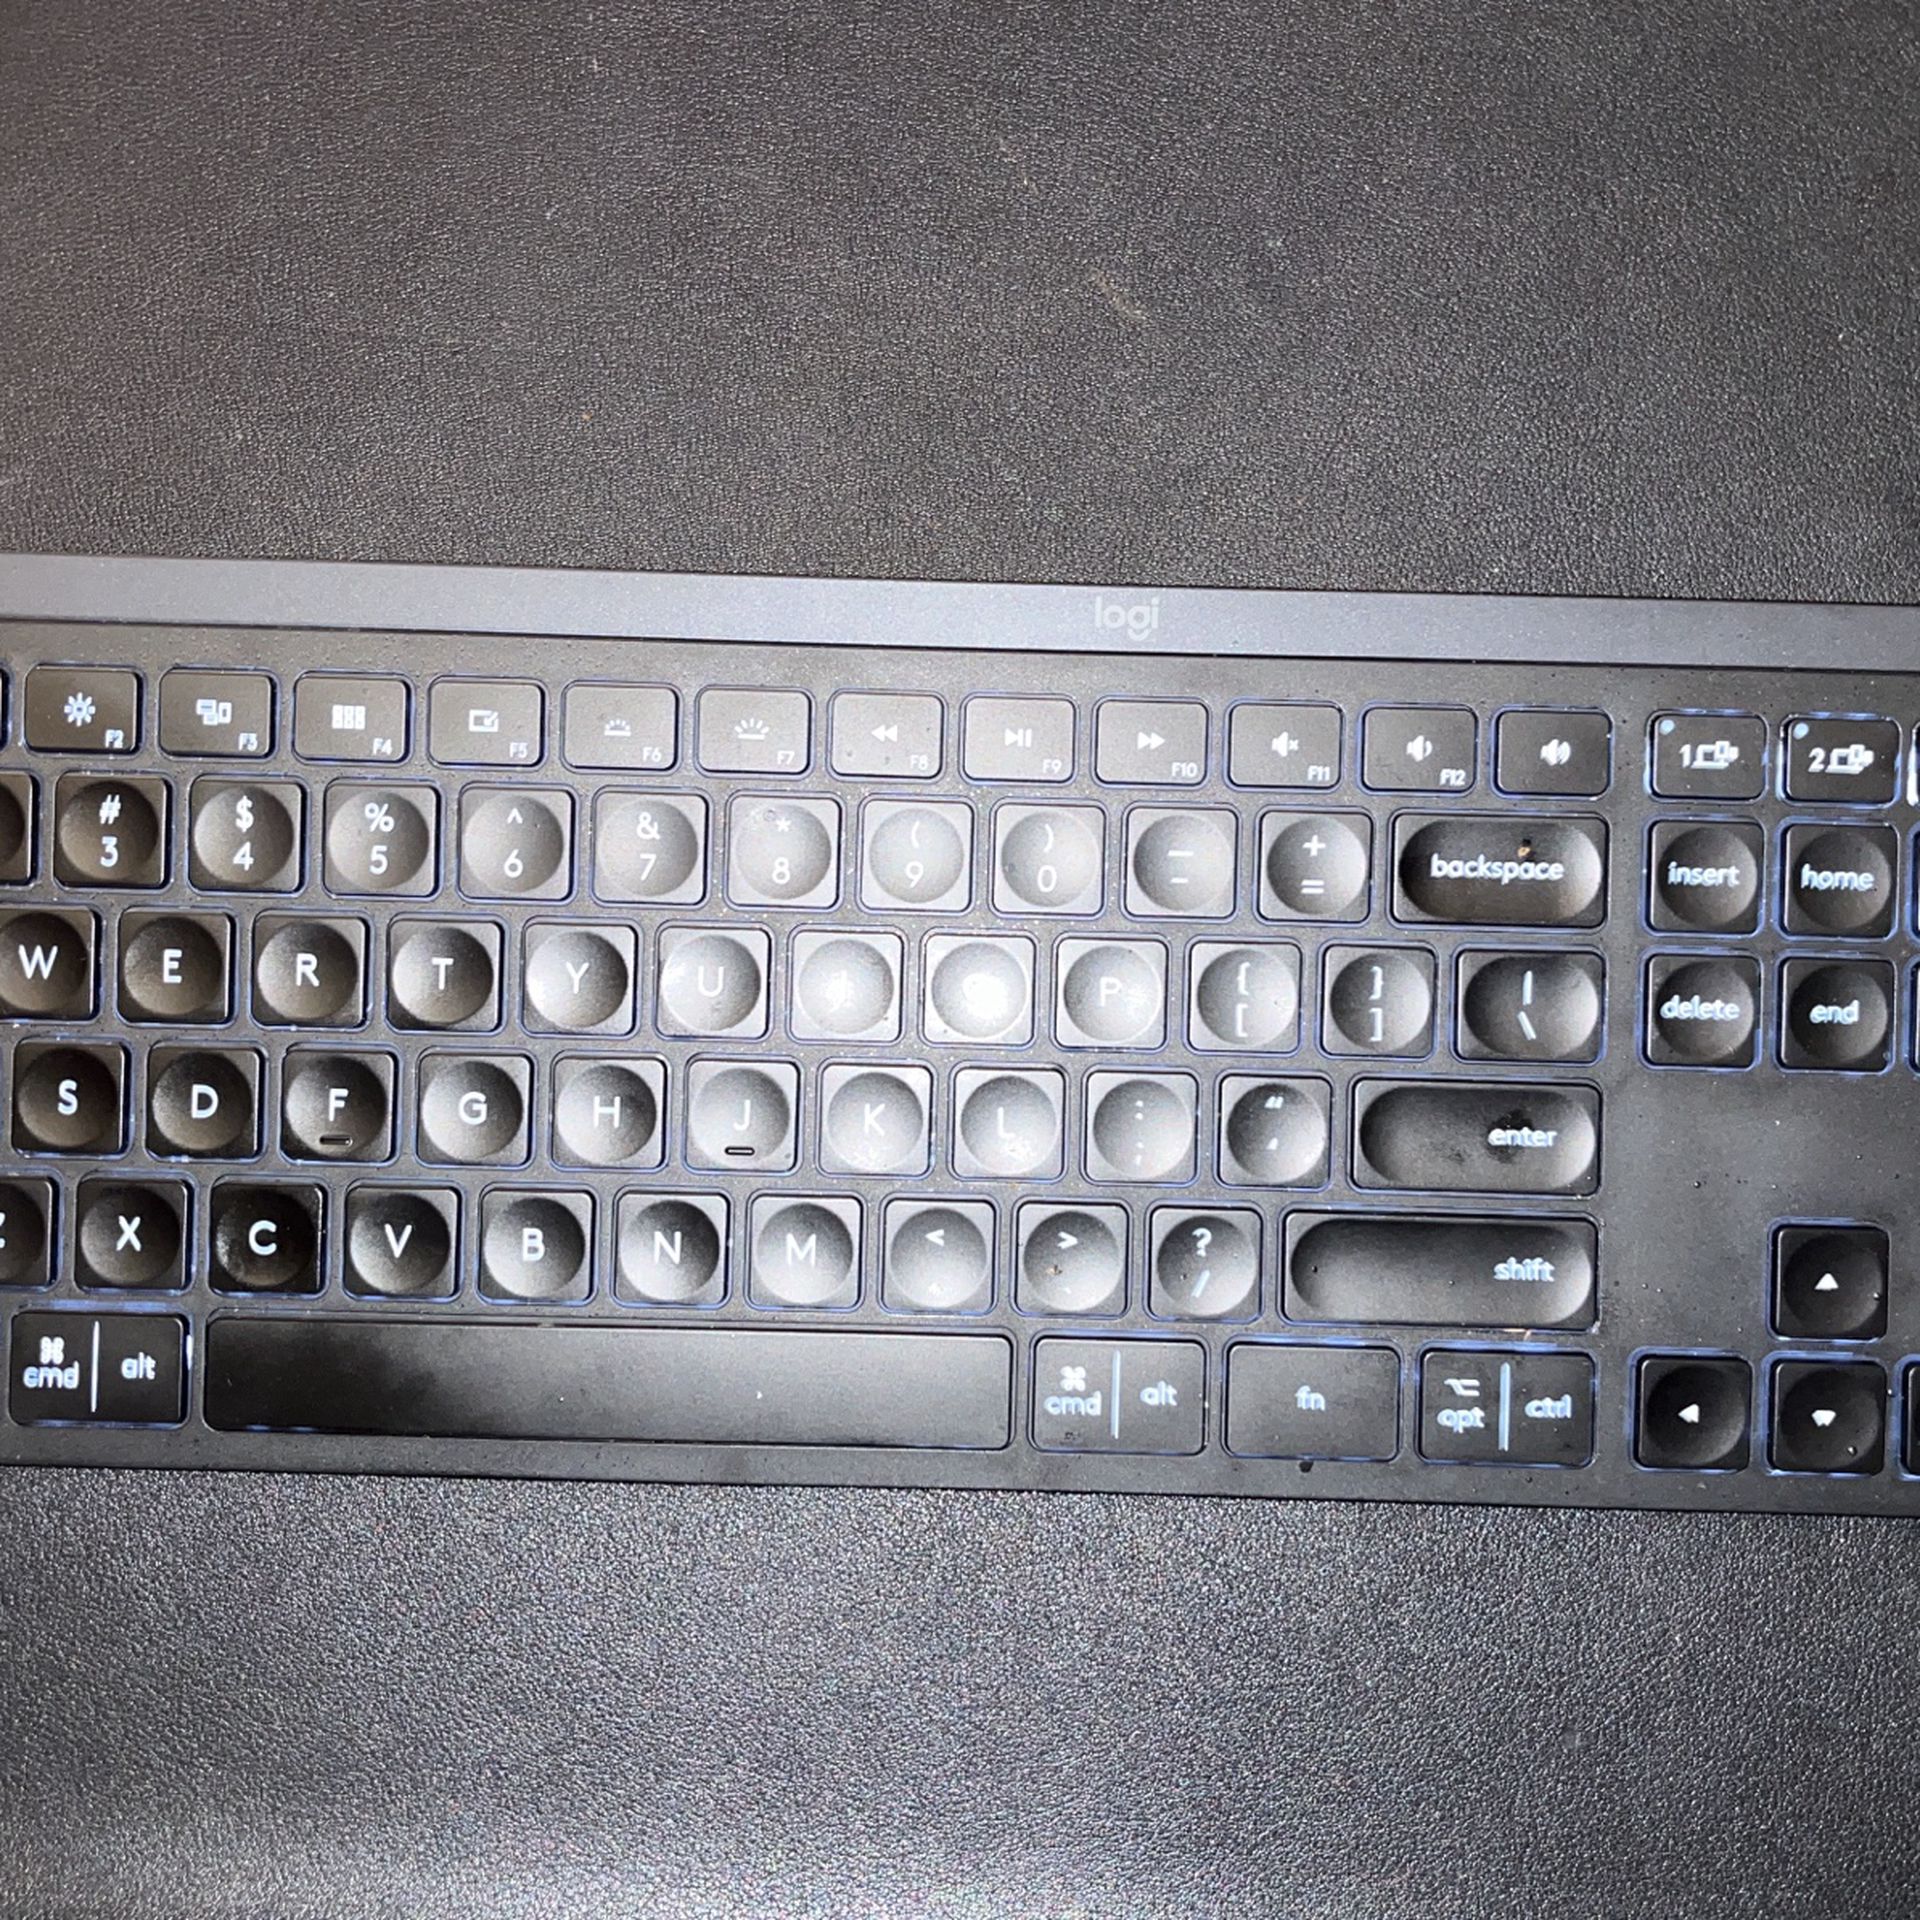 Mx keys Full Keyboard